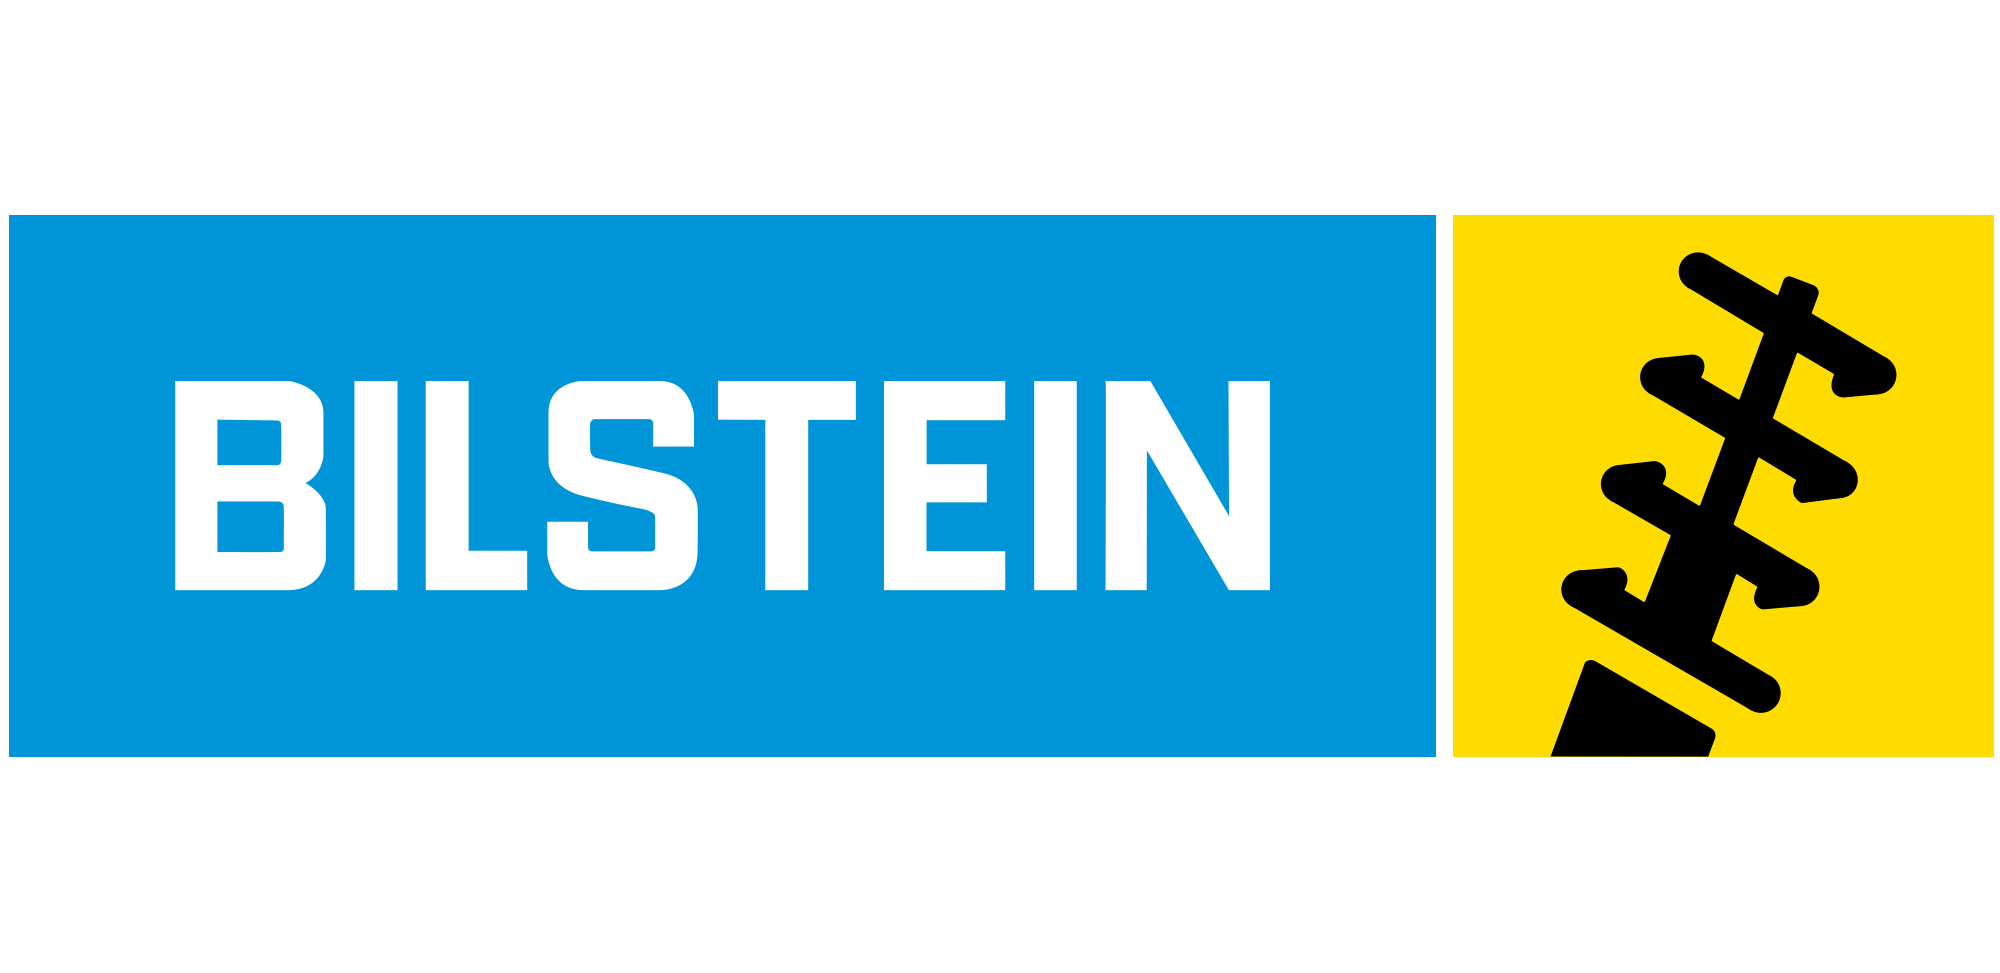 Blistein Logo